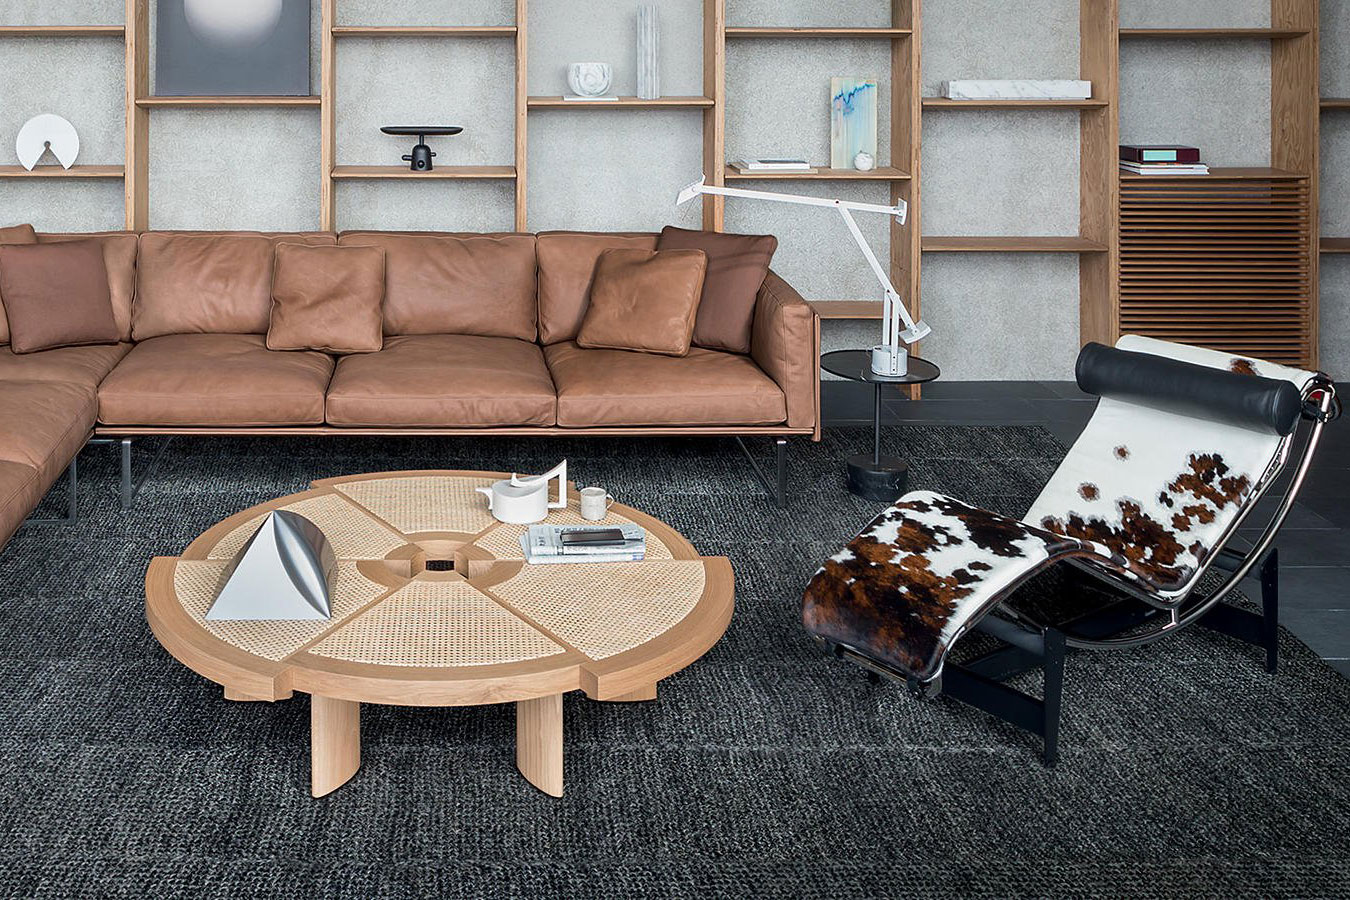 Vienna Straw Furniture - An Exciting Come Back To Modern Interior - WWW.AUTHENTICINTERIOR.COM design studio & blog